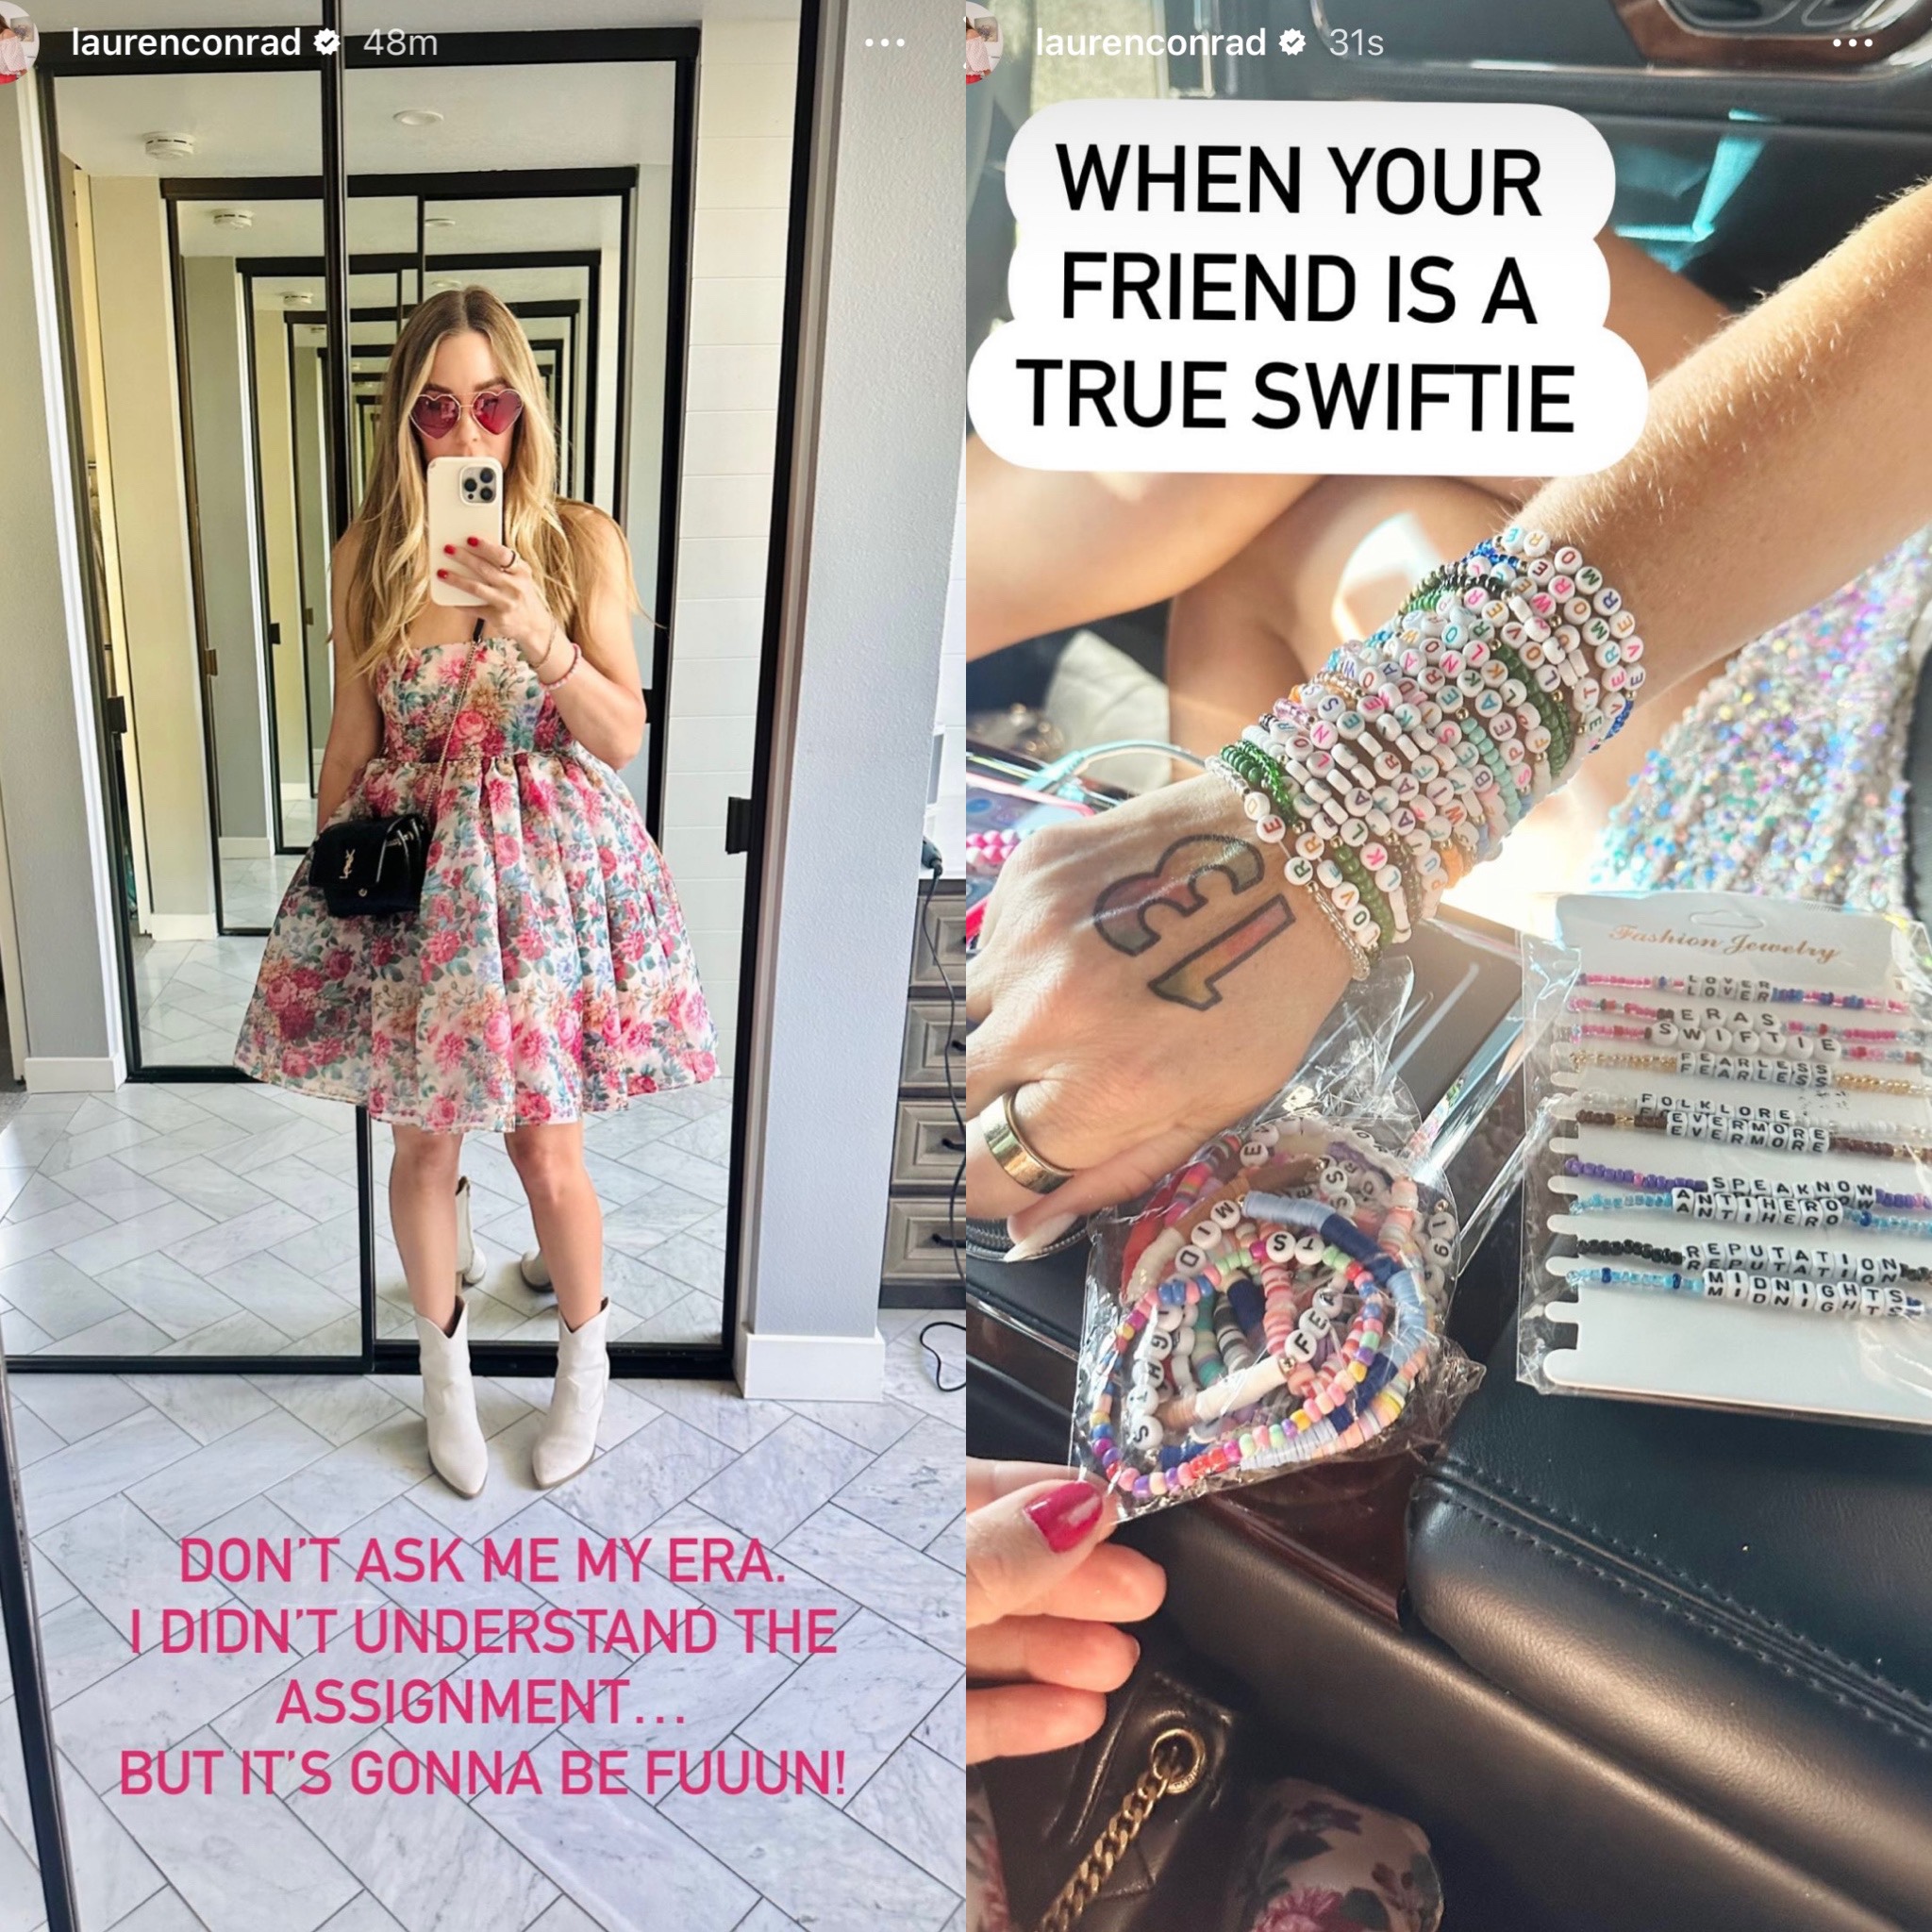 Lauren Conrad gets her Taylor Swift era on in true swiftie style